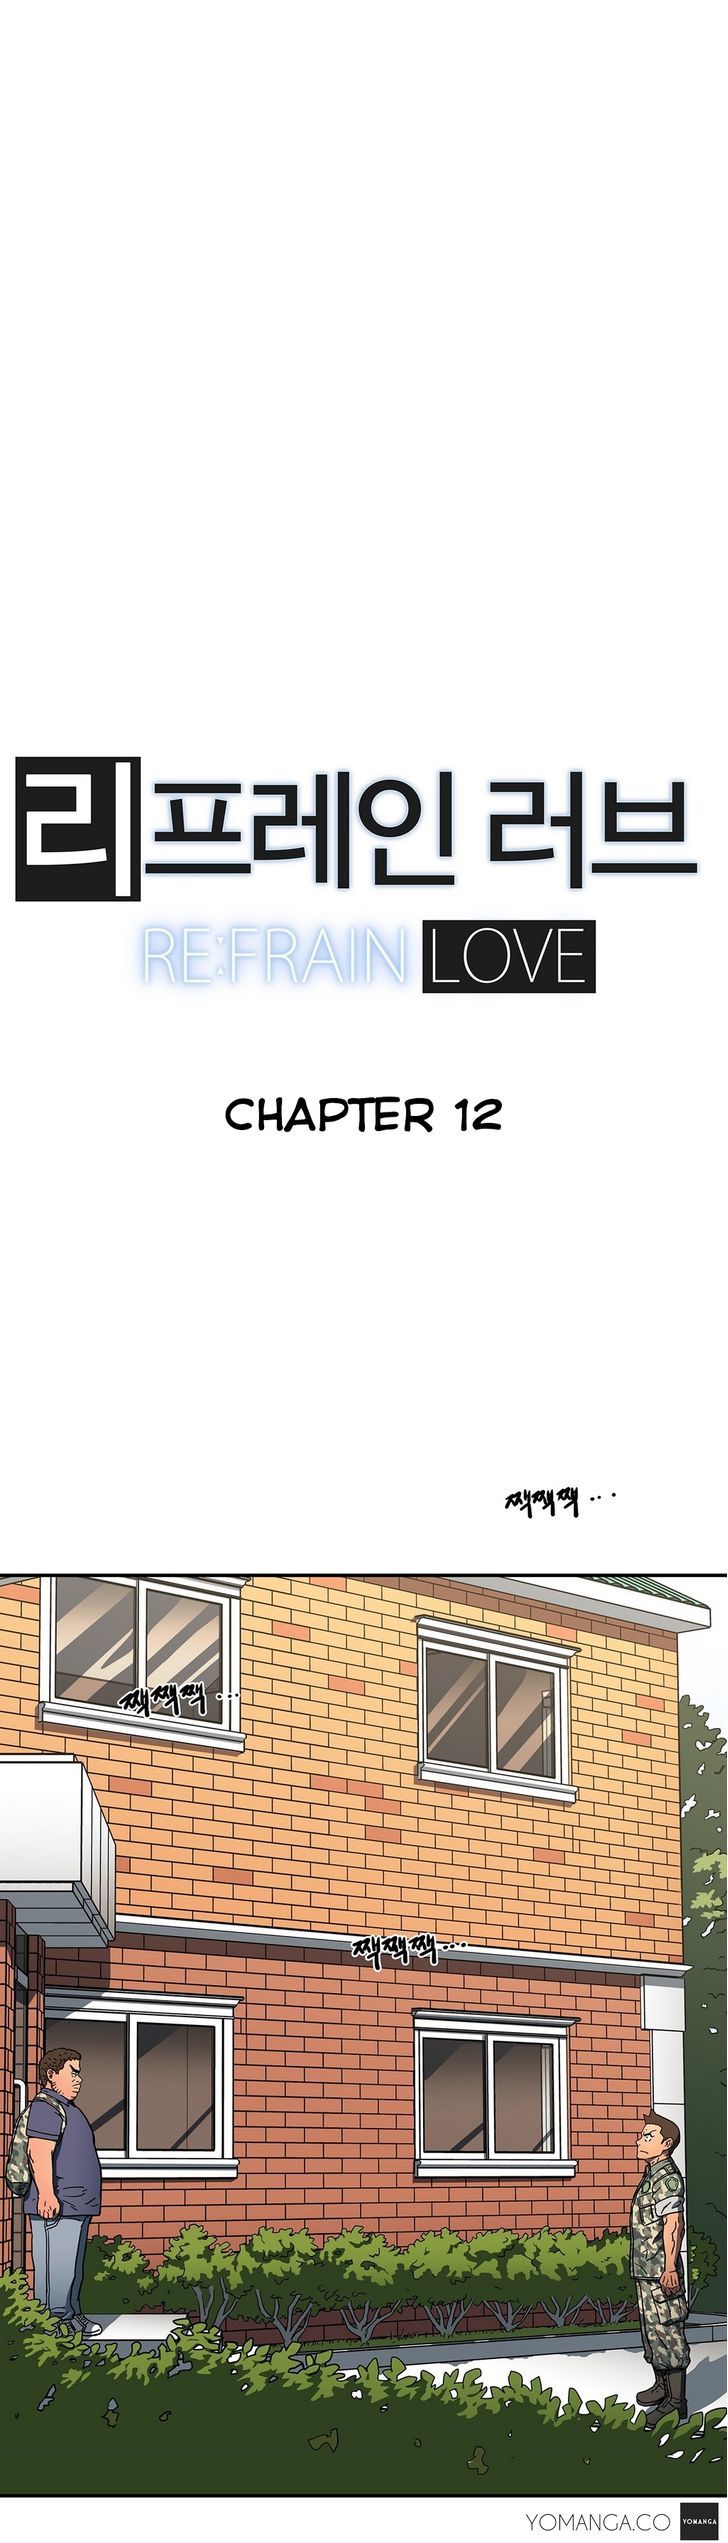 Refrain Love - Page 2